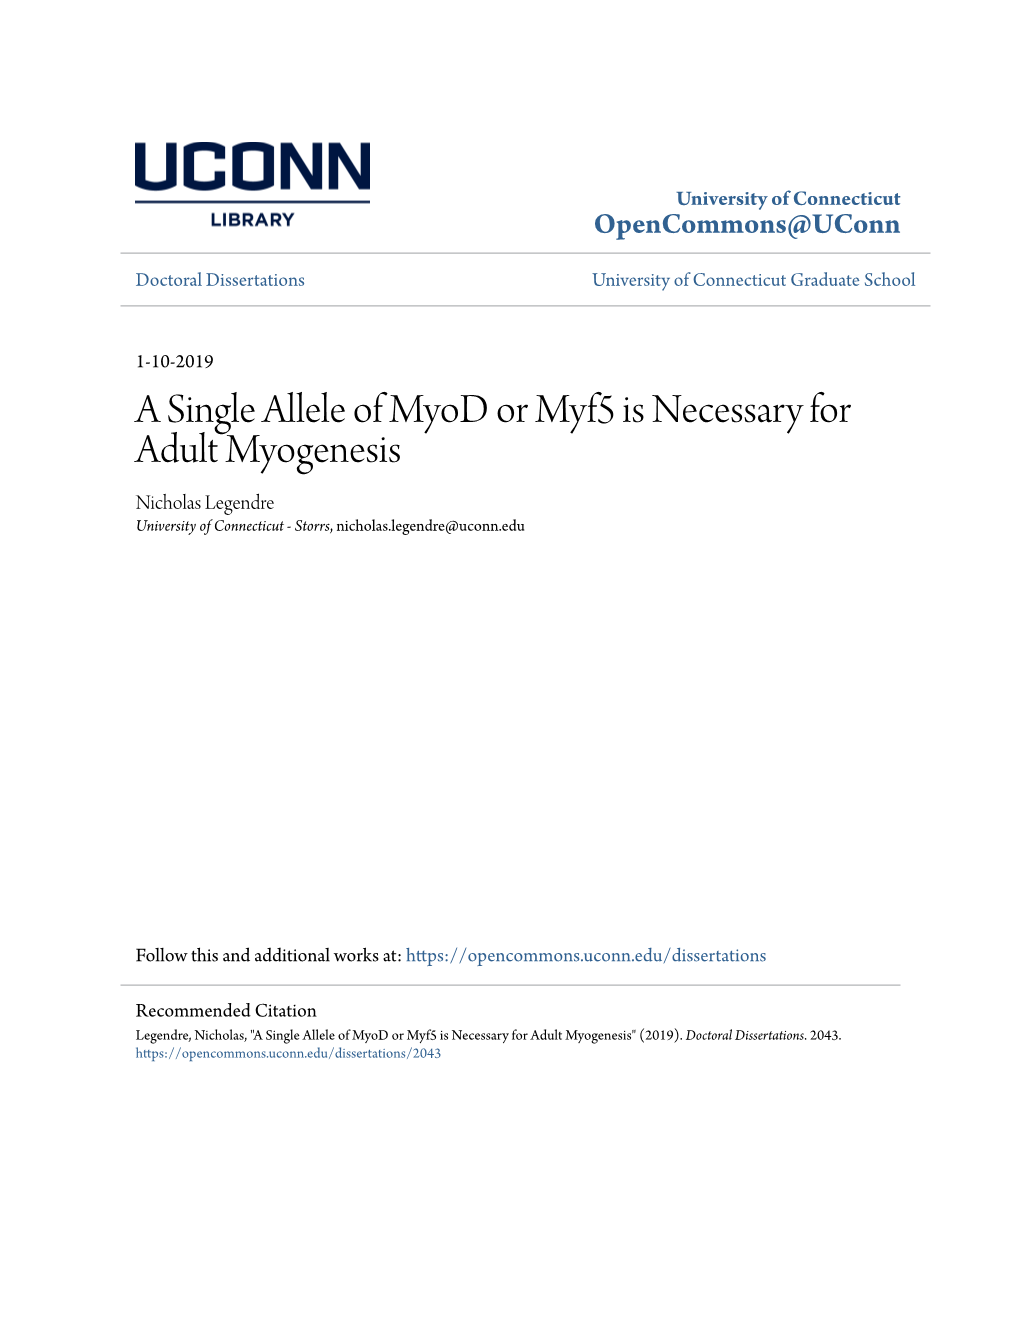 A Single Allele of Myod Or Myf5 Is Necessary for Adult Myogenesis Nicholas Legendre University of Connecticut - Storrs, Nicholas.Legendre@Uconn.Edu